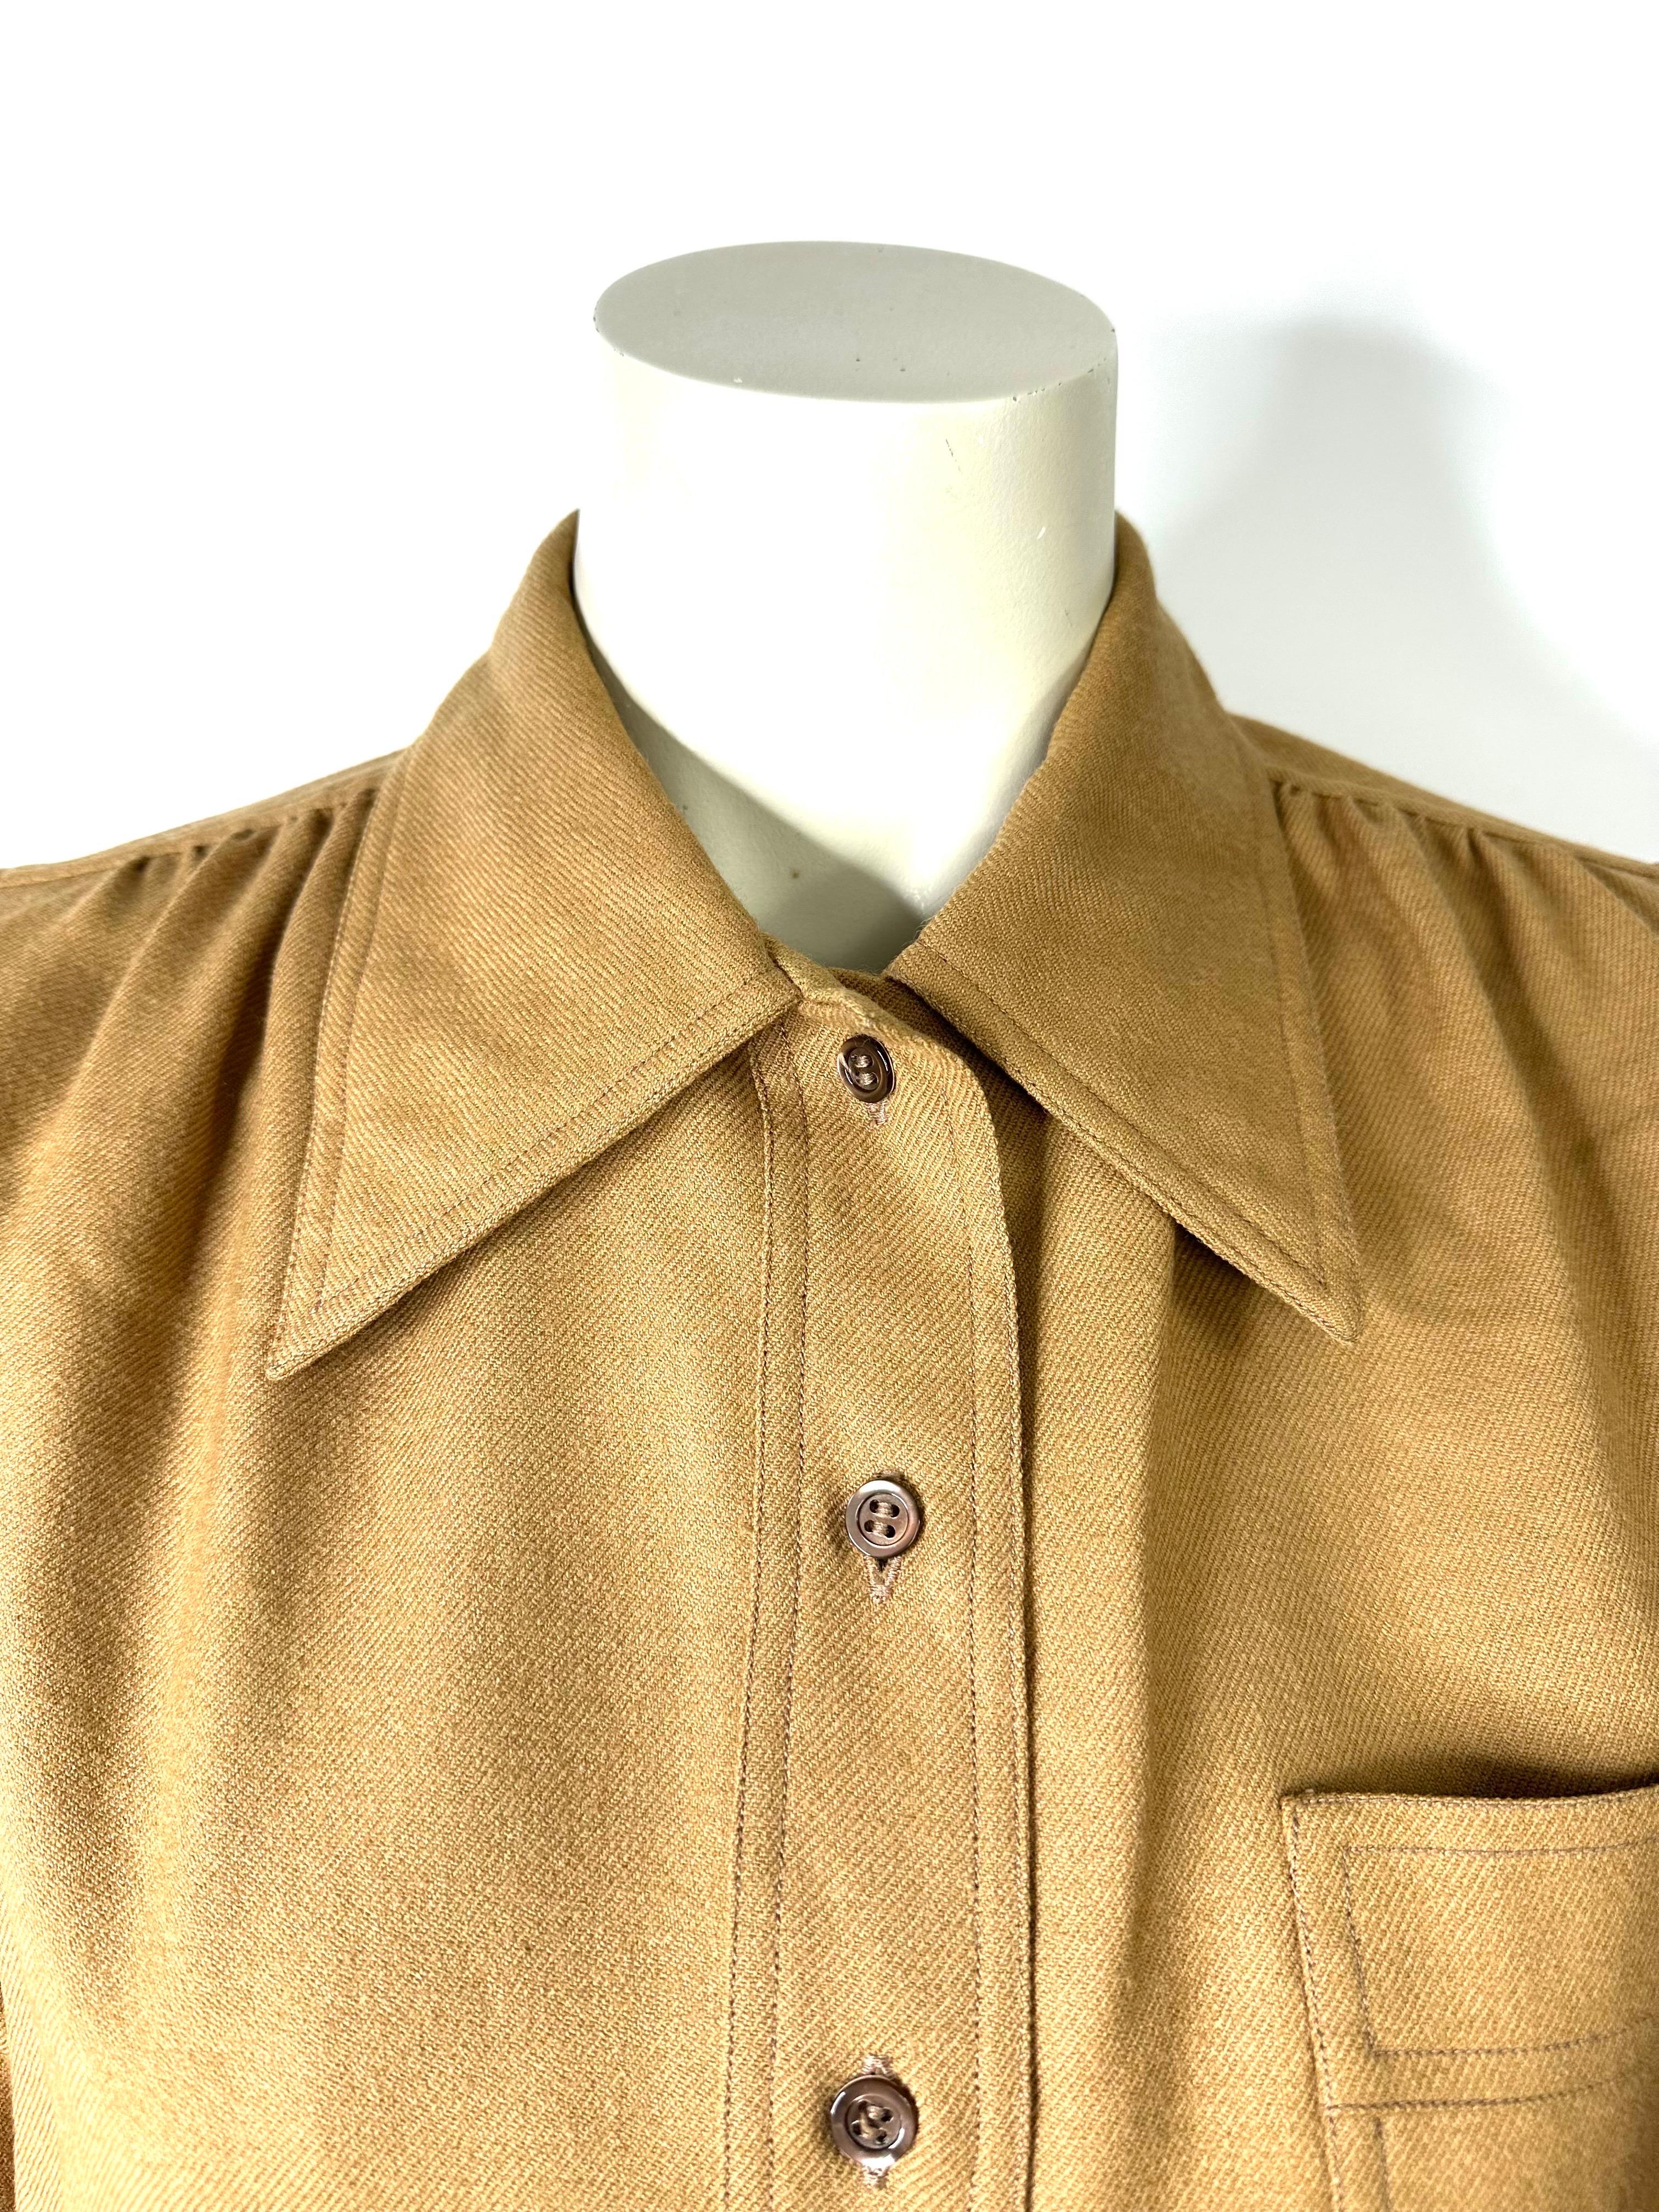 1970’s Yves saint Laurent vintage wool safari style shirt  For Sale 1